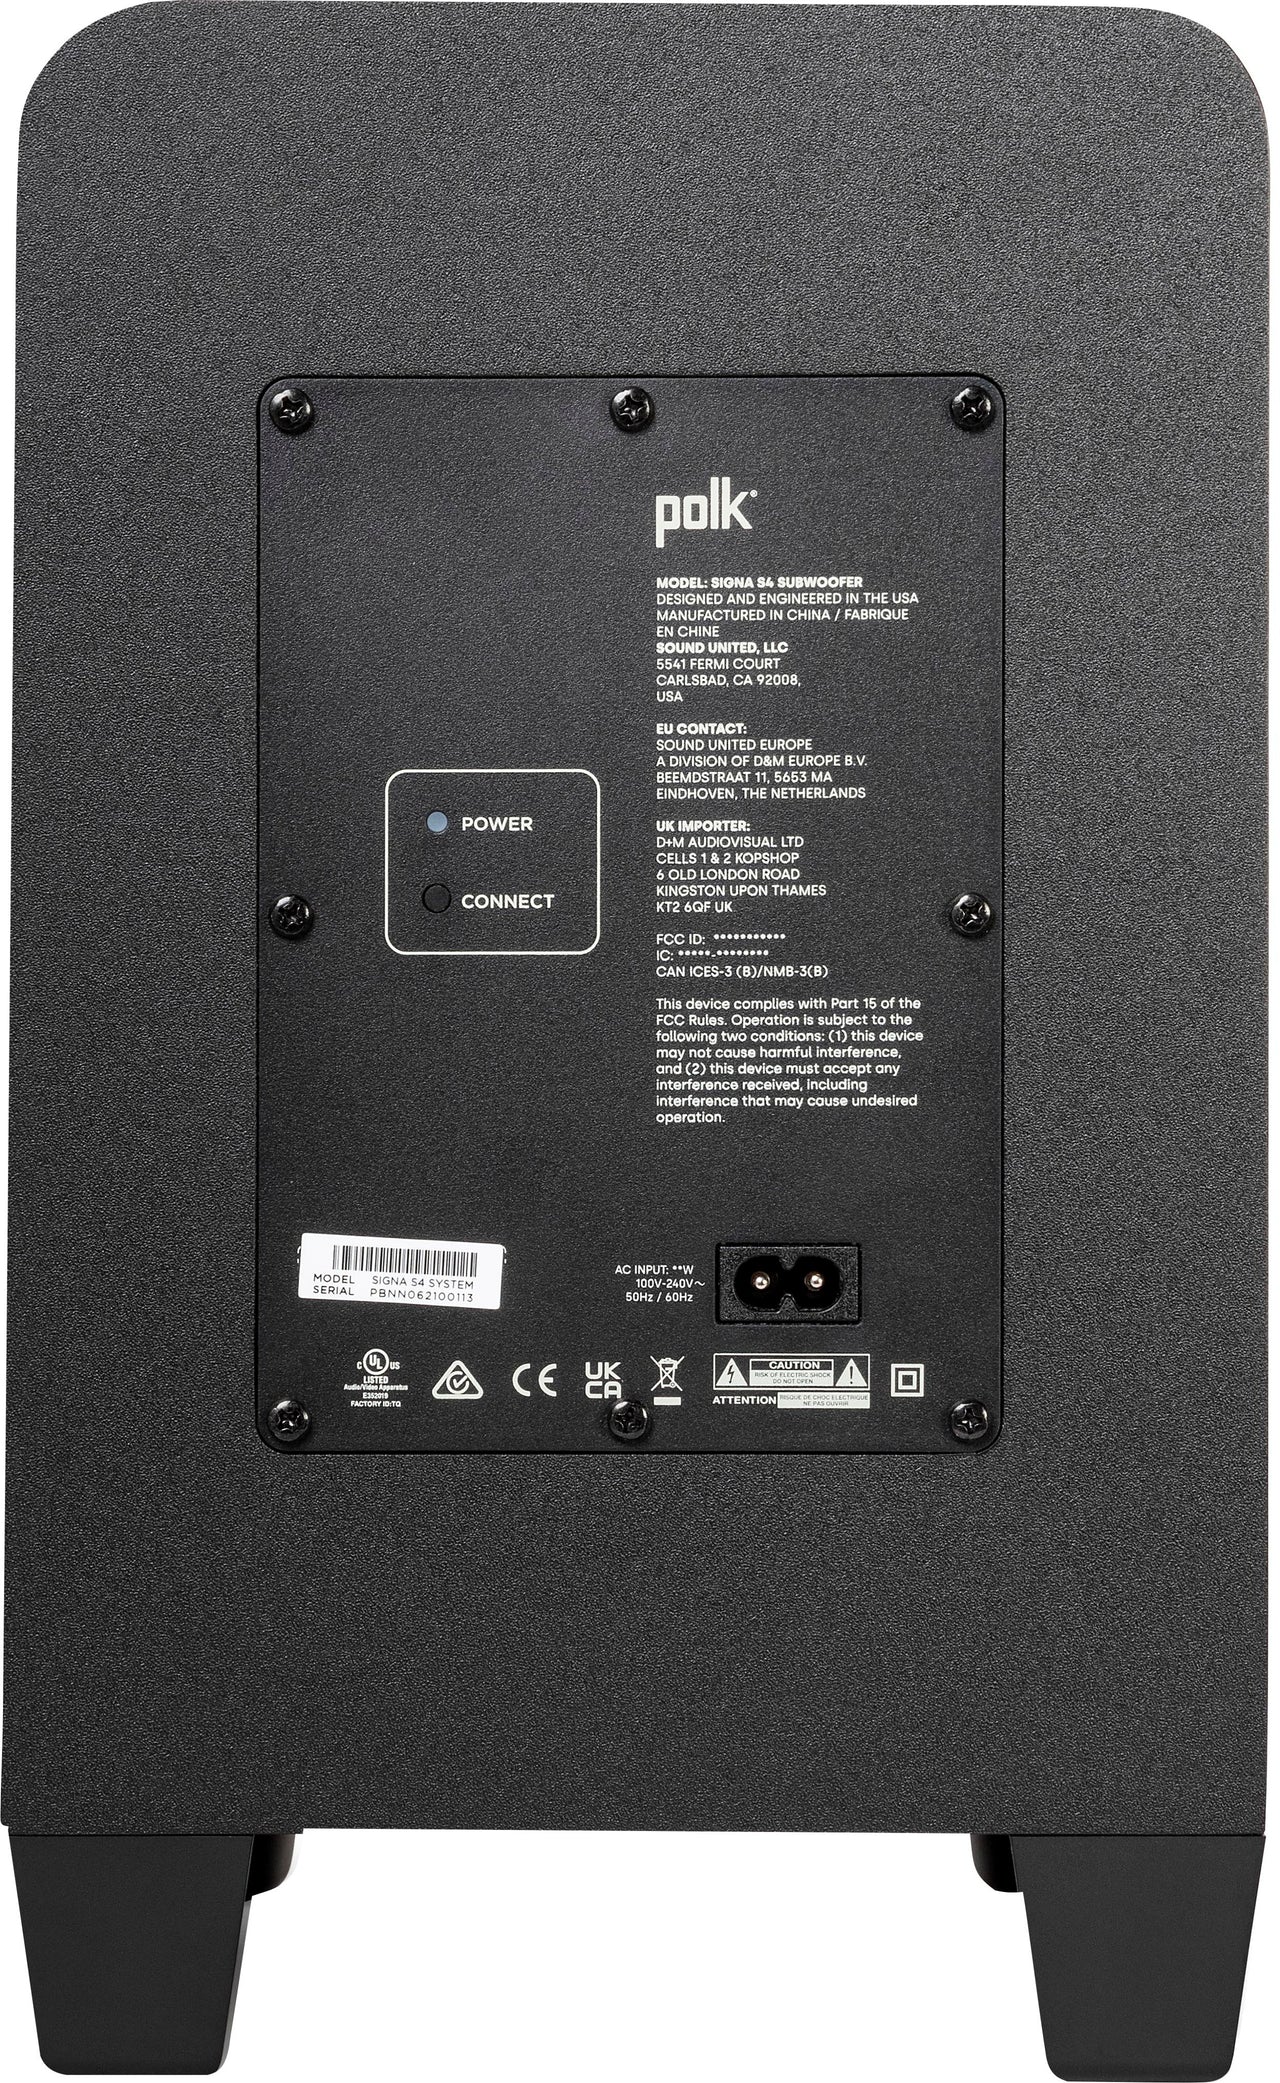 Polk Audio - Signa S4 Ultra-Slim TV Sound Bar with Wireless Subwoofer, Dolby Atmos 3D Surround Sound, Works with 8K, 4K & HD TVs - Black